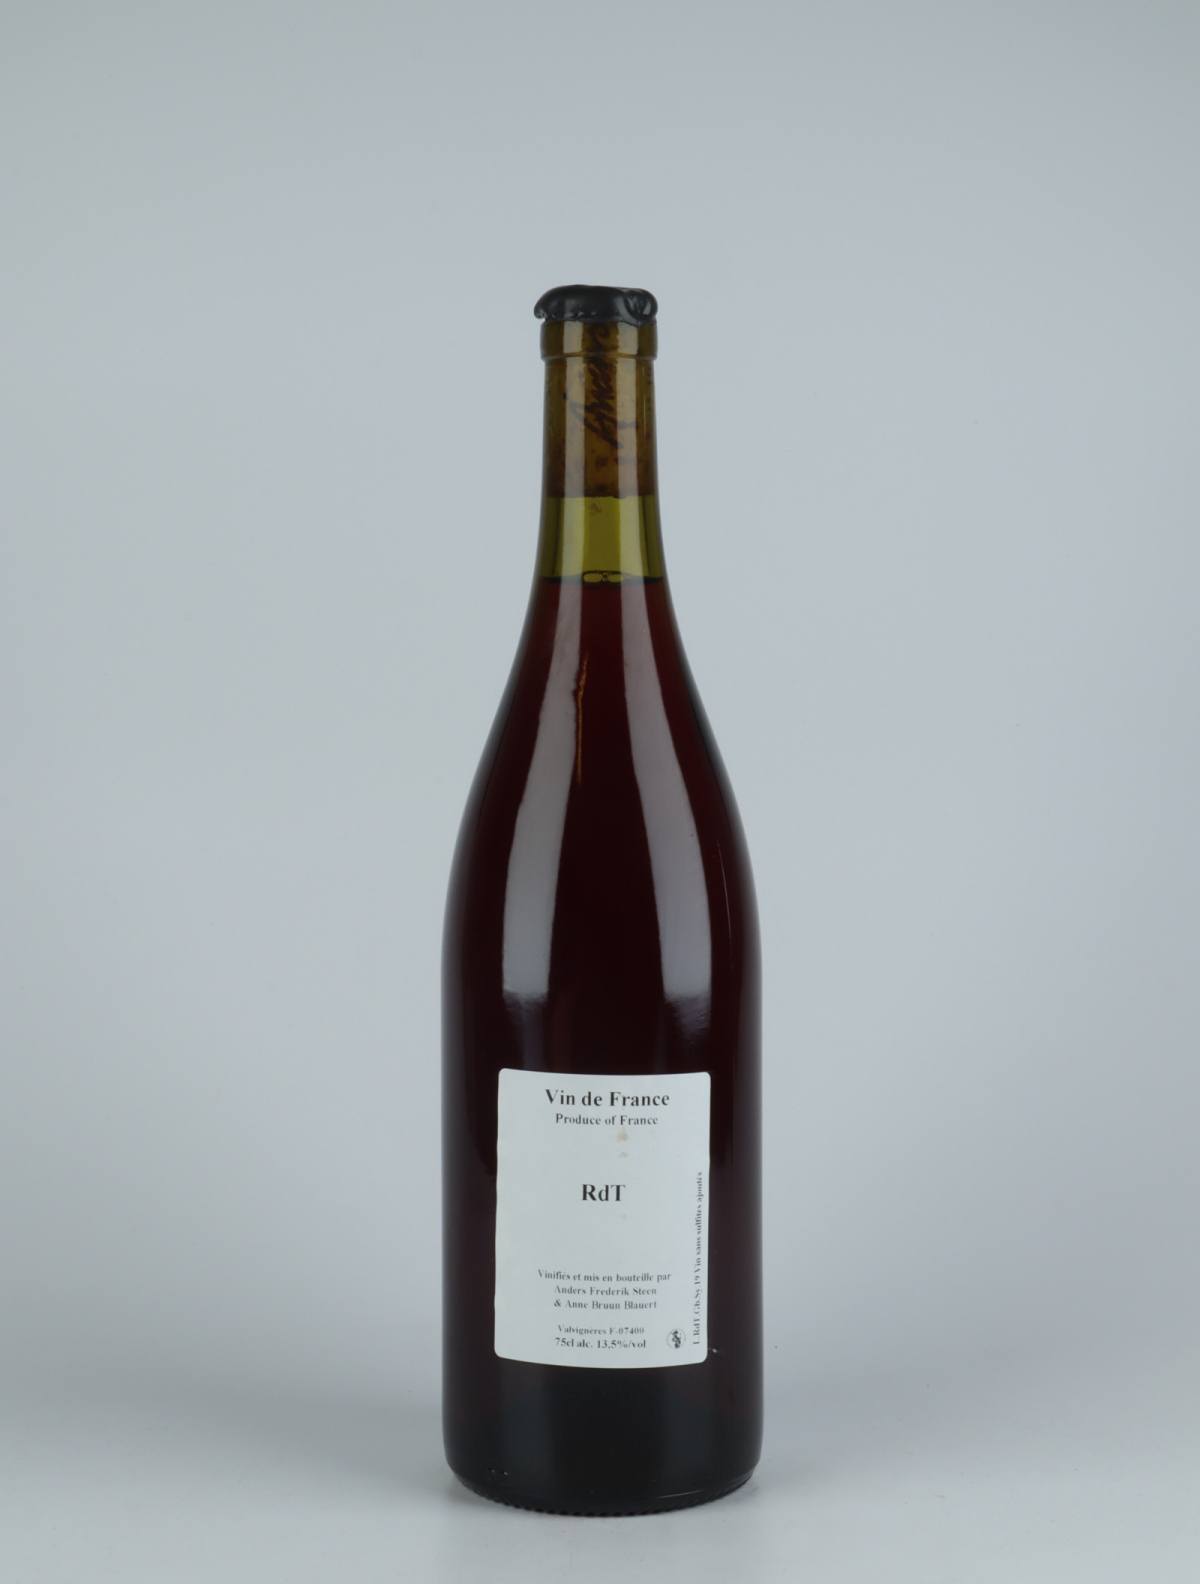 A bottle 2019 Rdt Red wine from , Ardèche in France